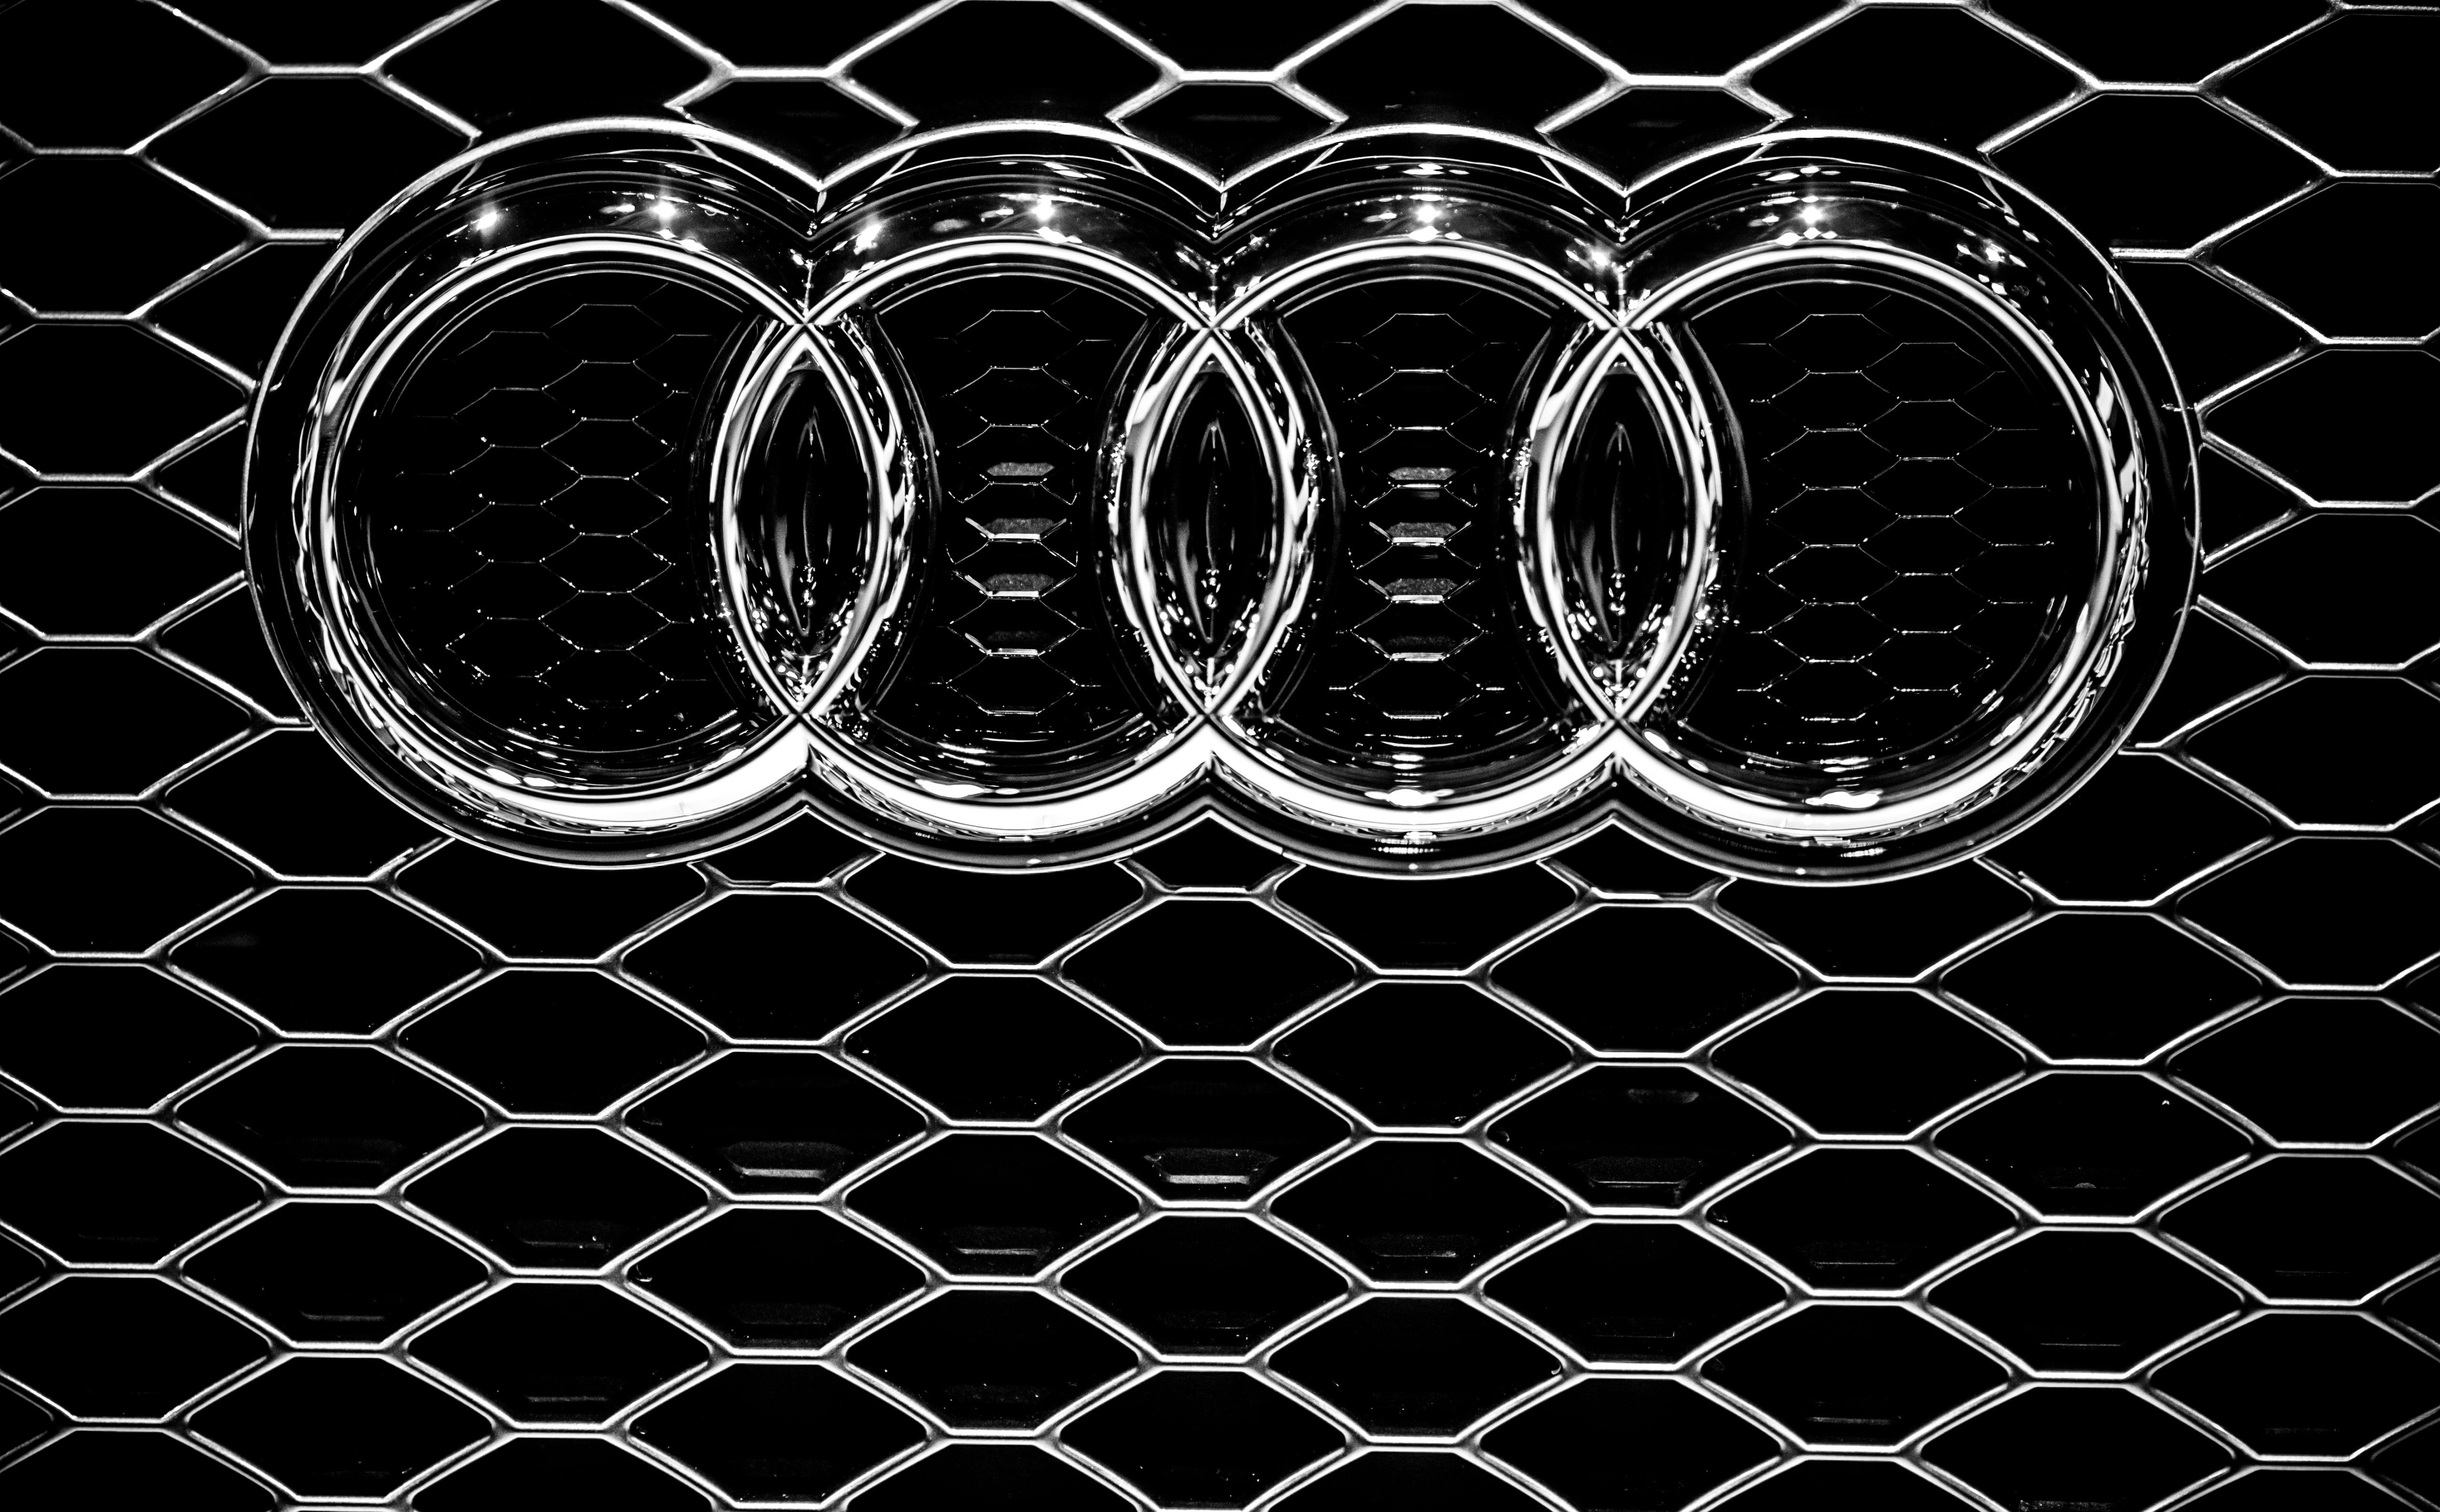 Audi 2012, Audi emblem, Black and White, Michigan, Auto, Ford